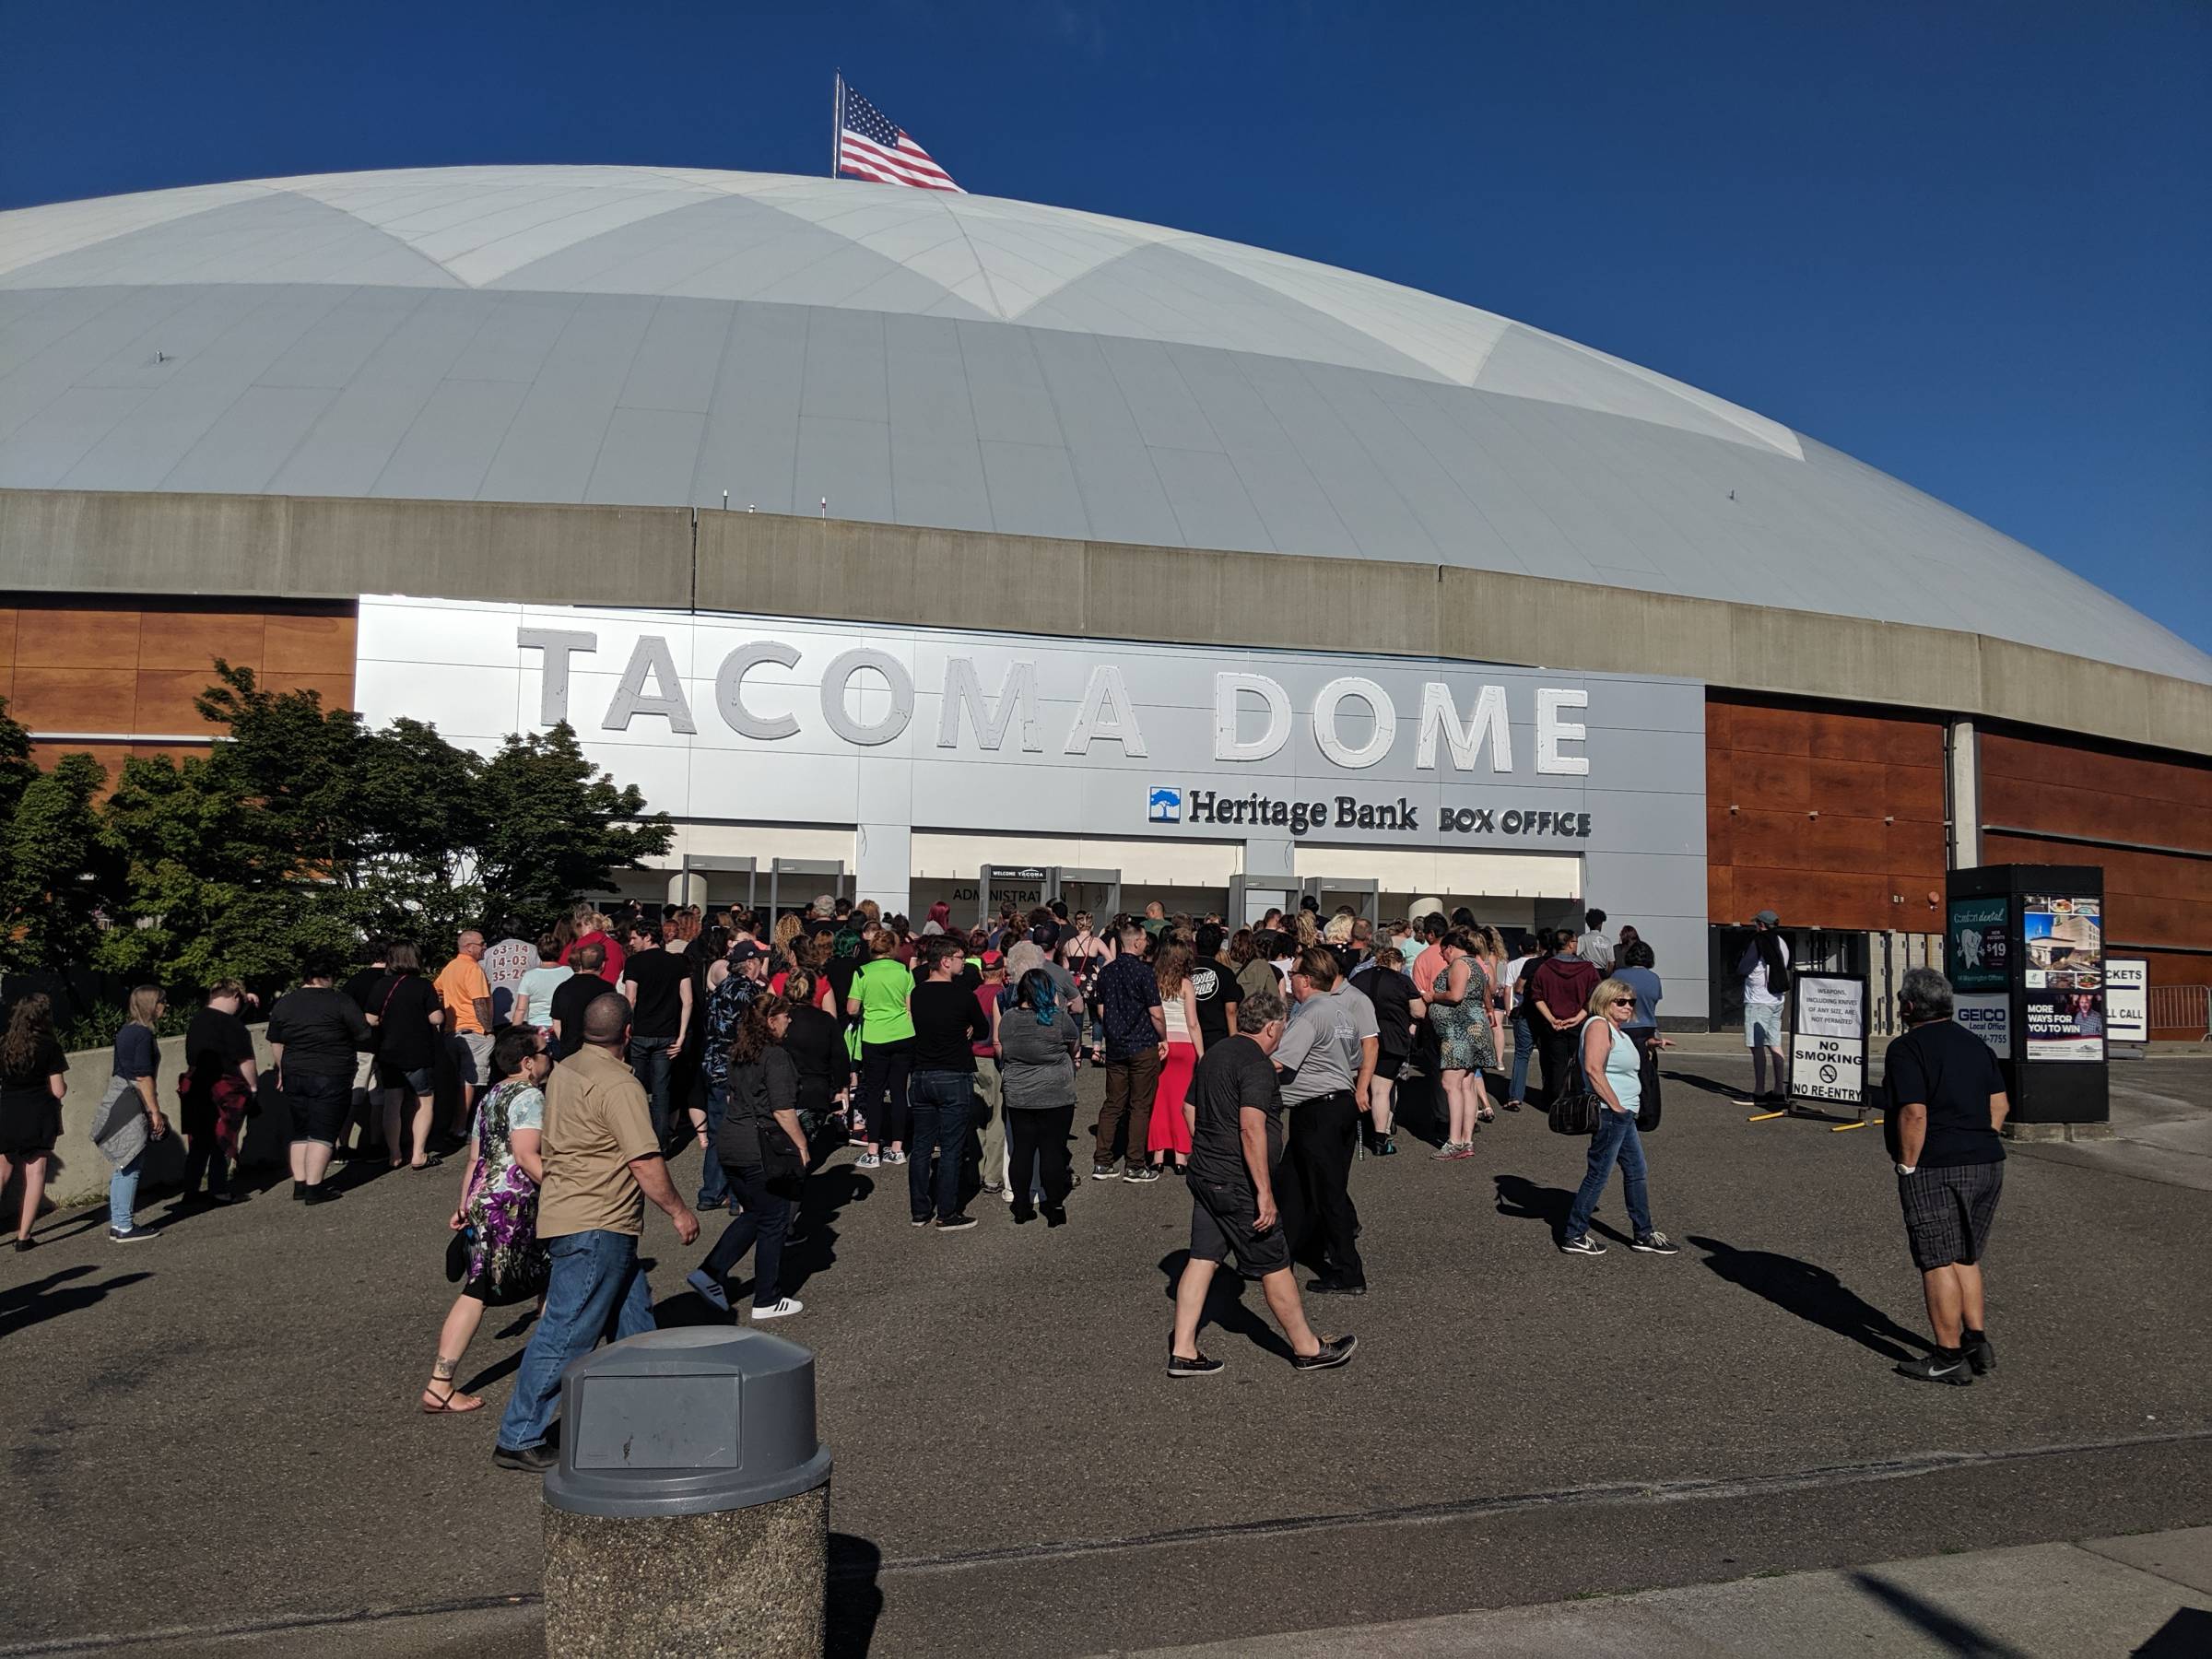 Doors at the Tacoma Dome